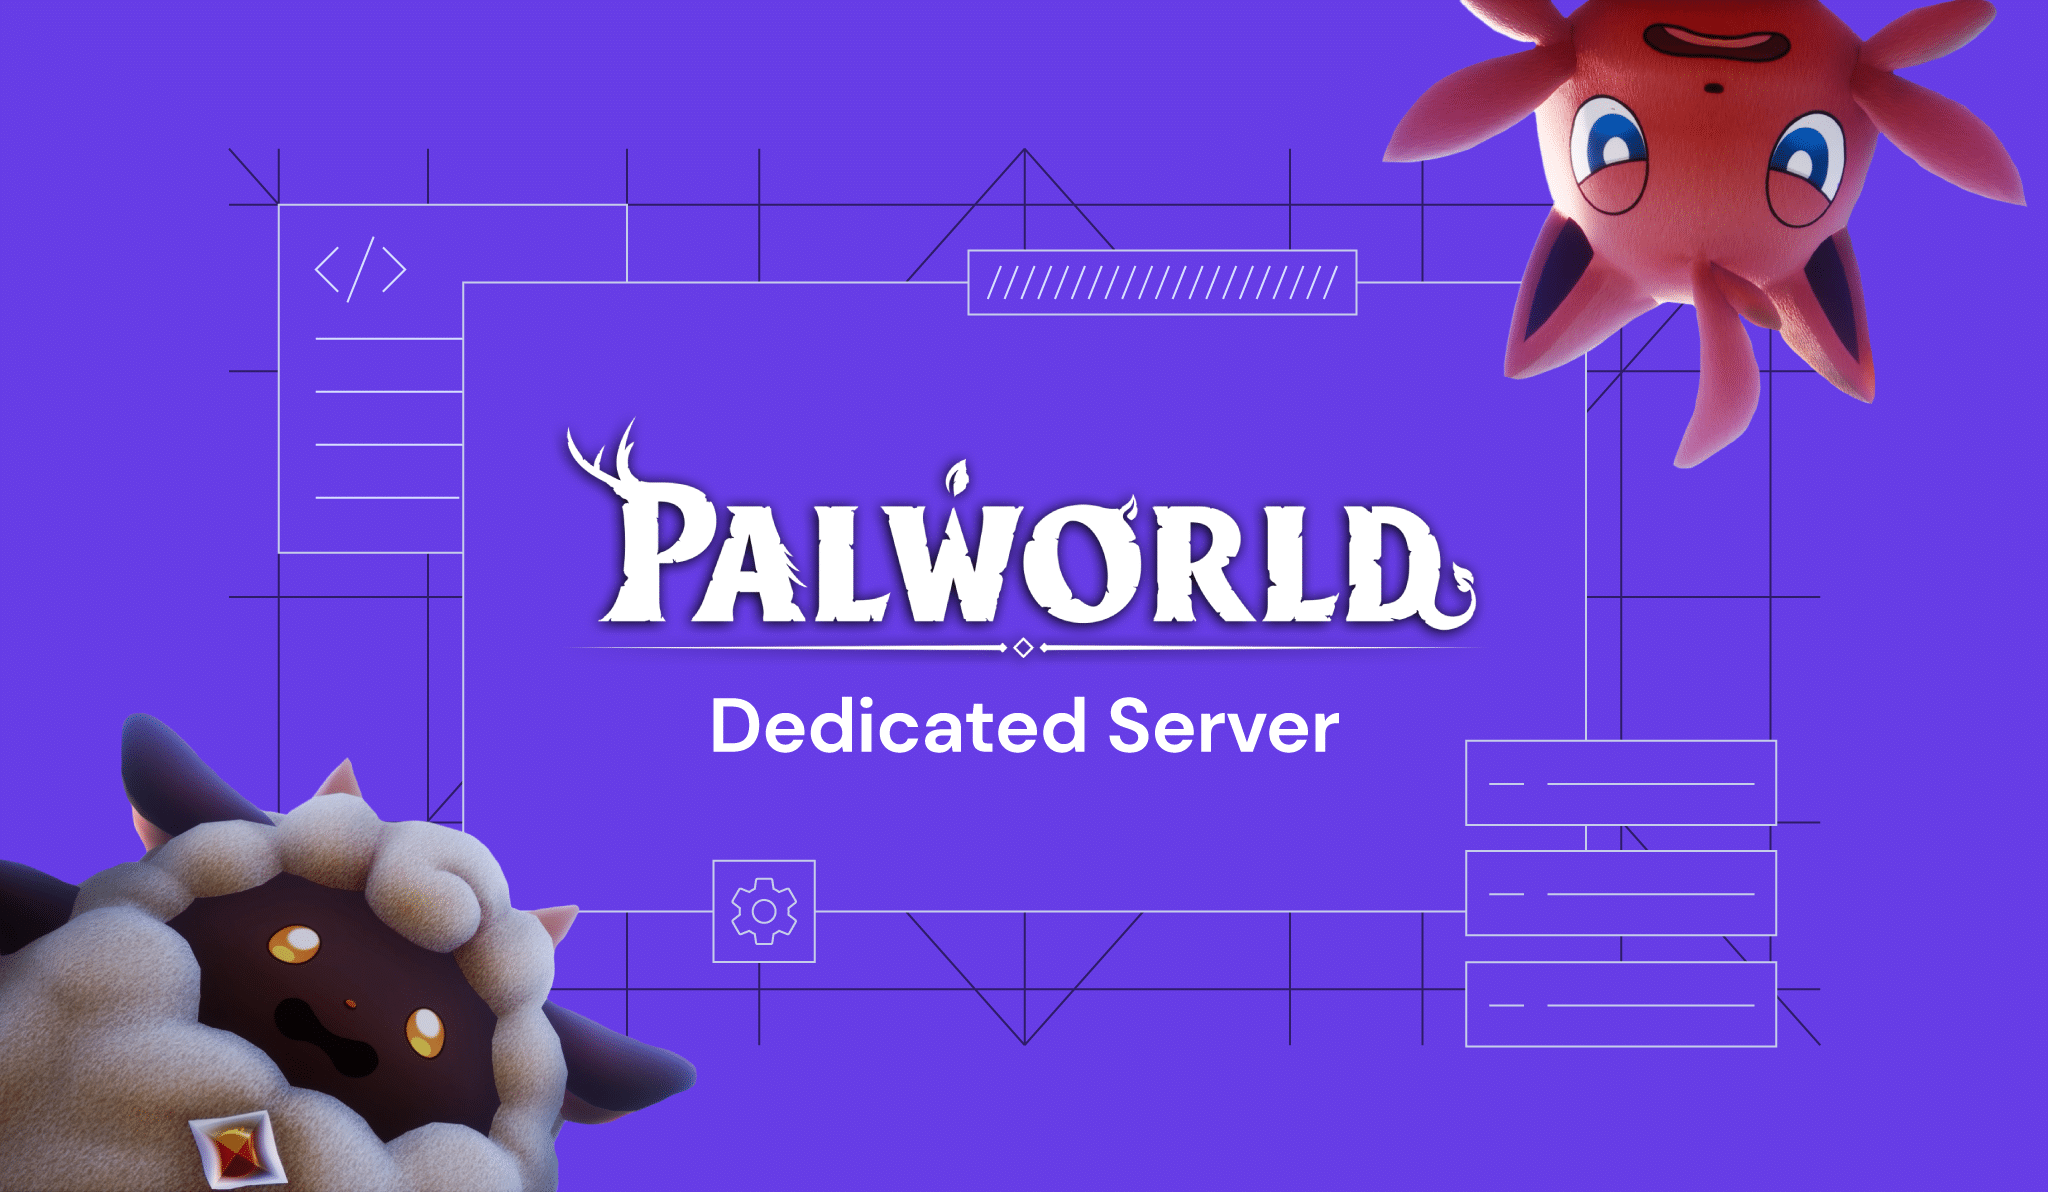 palworld dedicated server hosting